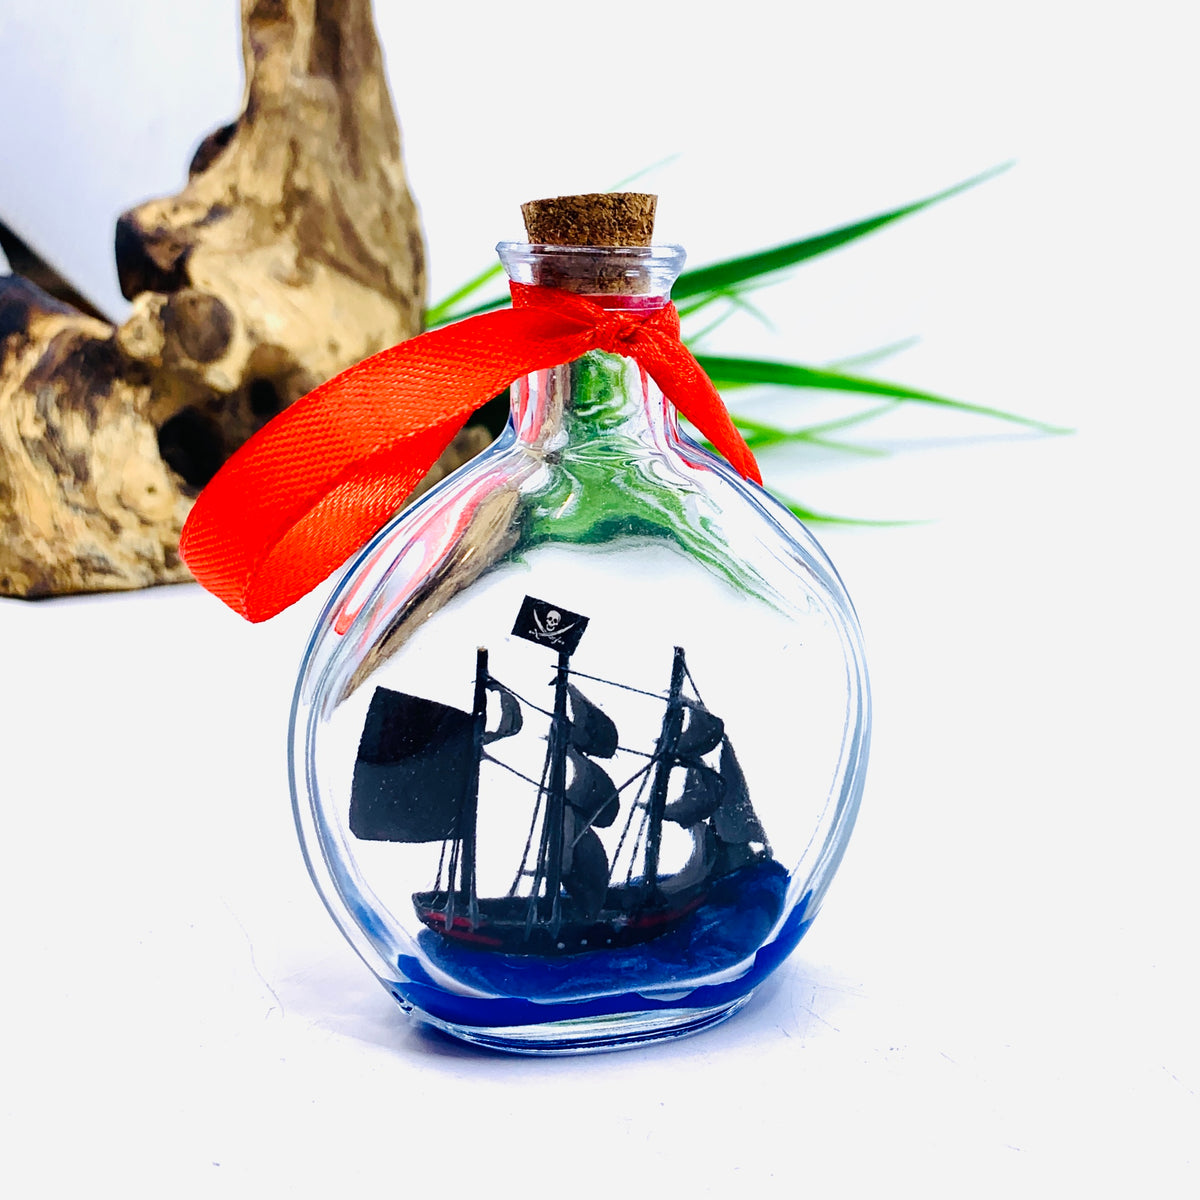 Pirate Ship in a Bottle Ornament